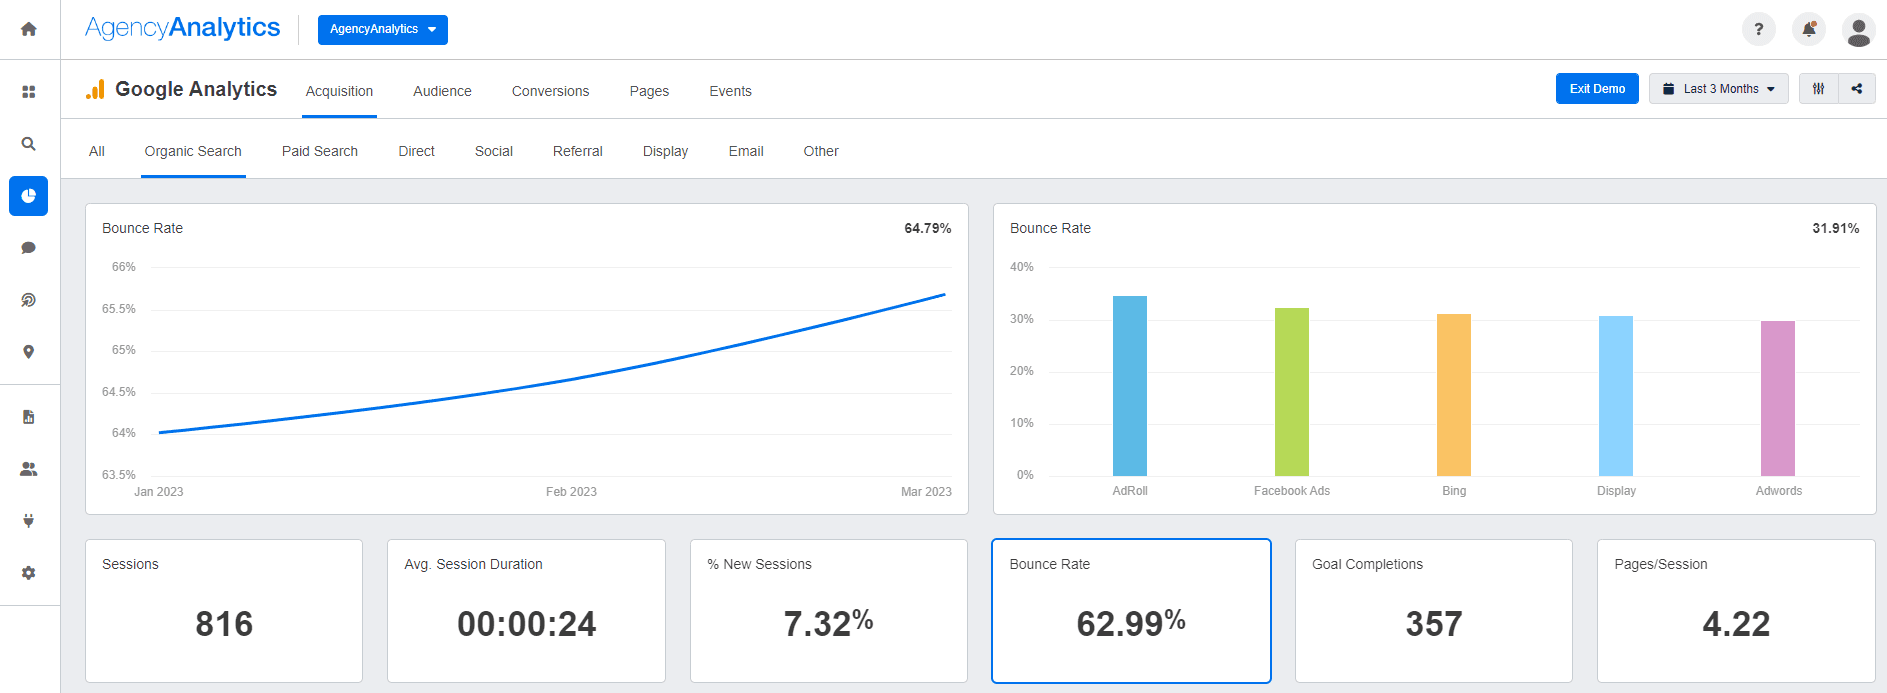 AgencyAnalytics Google Analytics reporting dashboard showing Bounce Rate